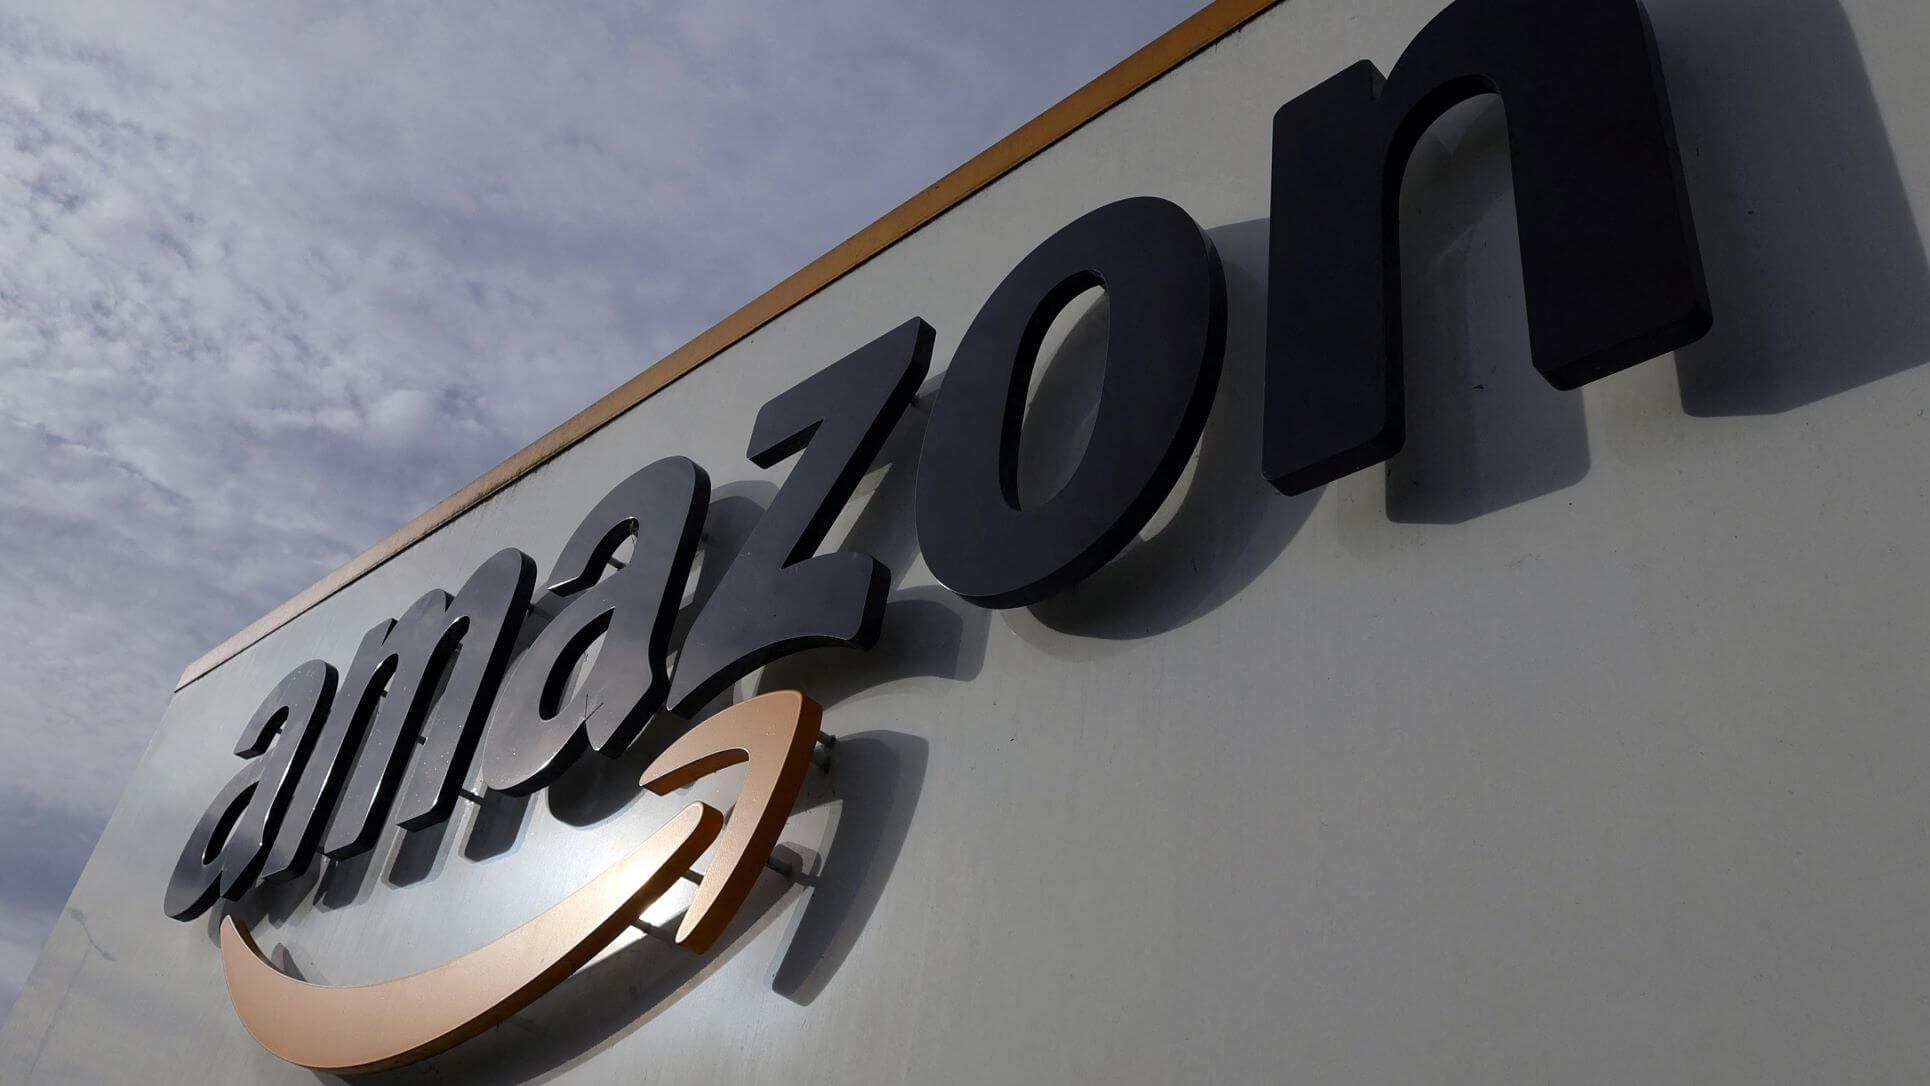 Amazon Workers Across World Urged To Strike On Black Friday